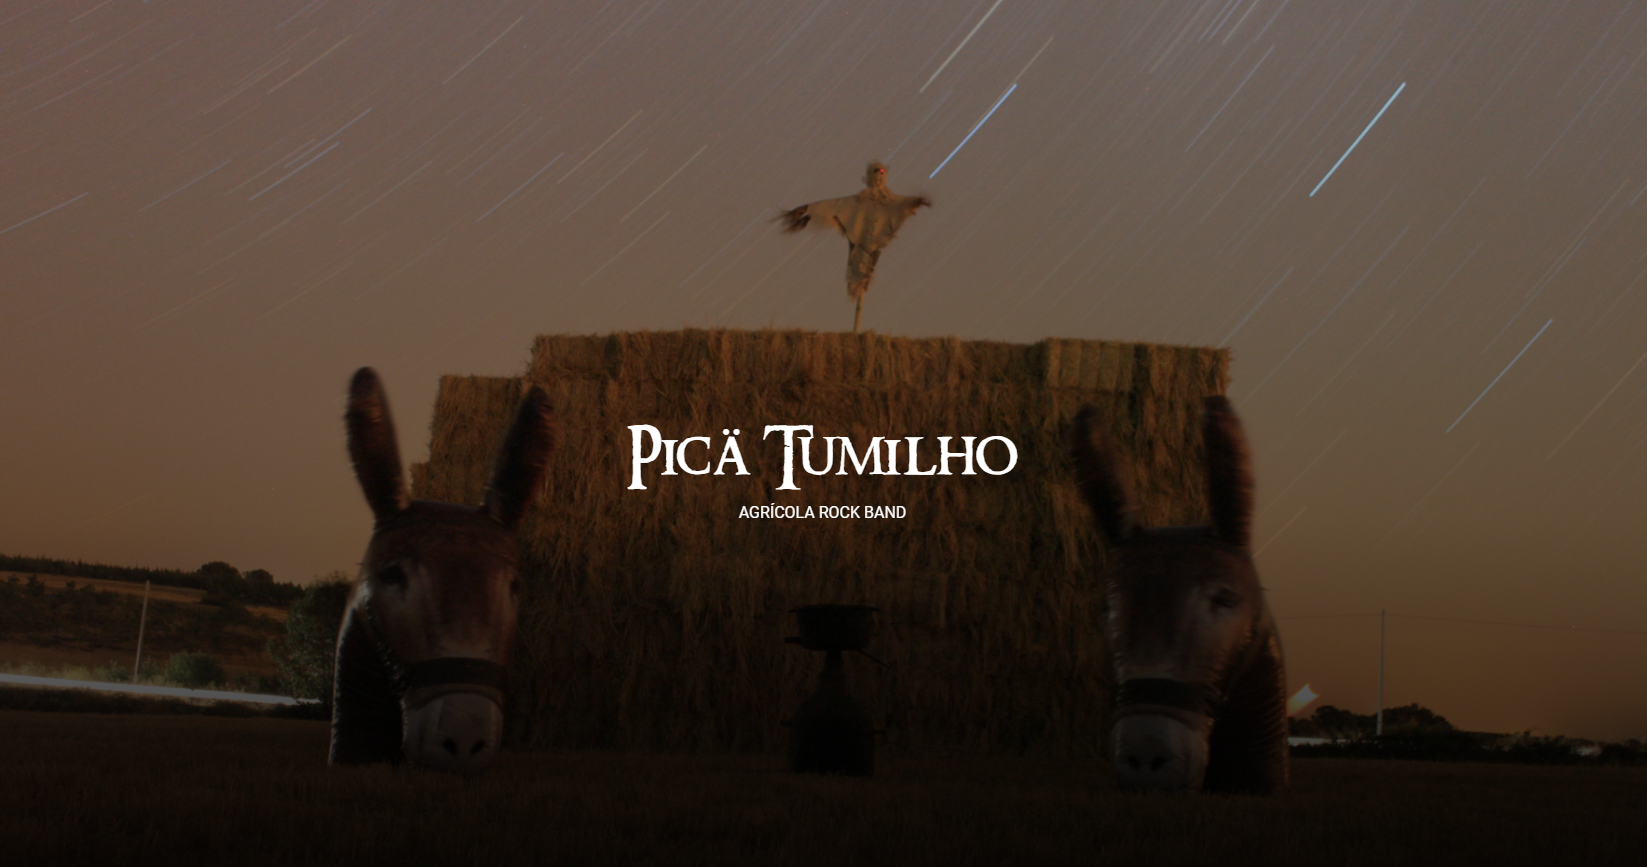 (c) Picatumilho.com